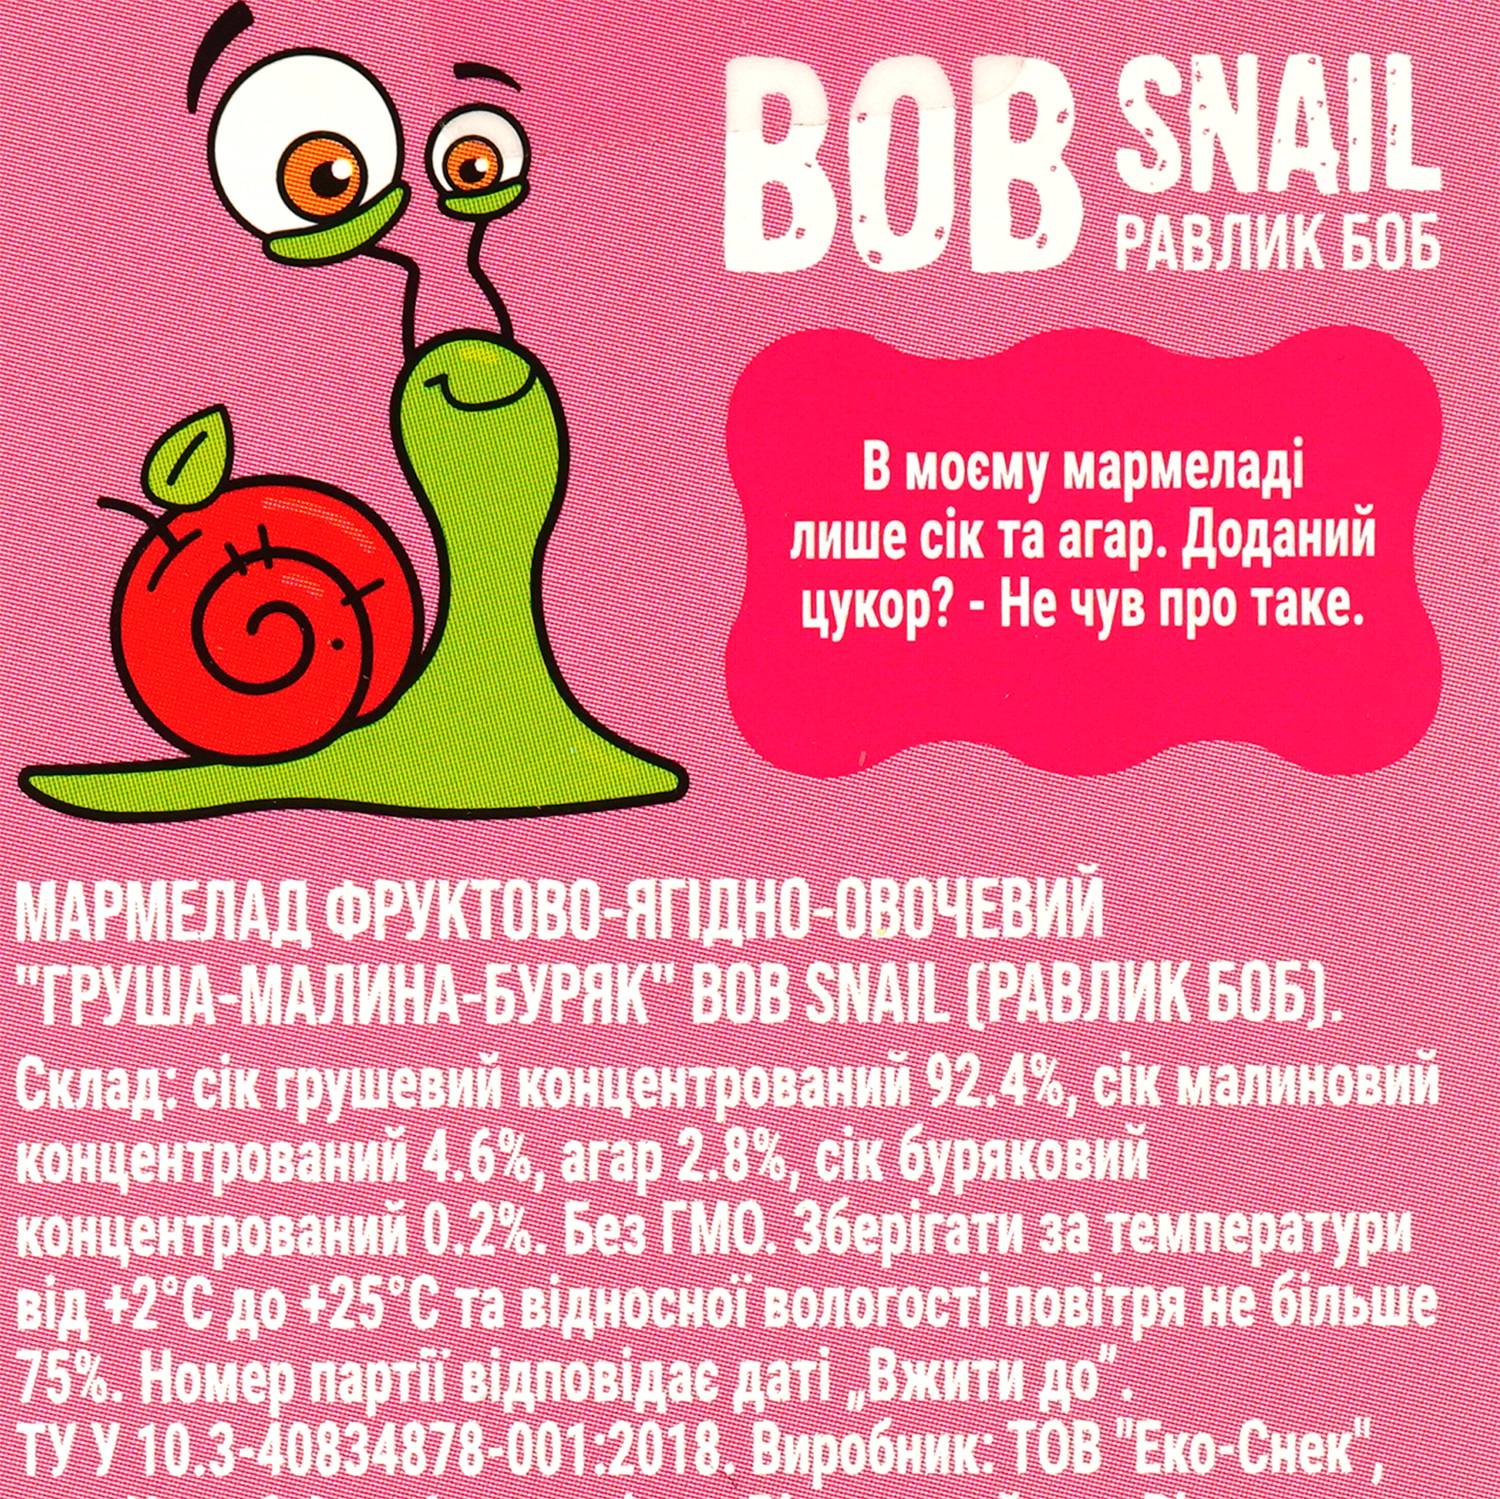 Фруктово-ягодно-овощной мармелад Bob Snail Груша-Малина-Свекла 27 г - фото 3